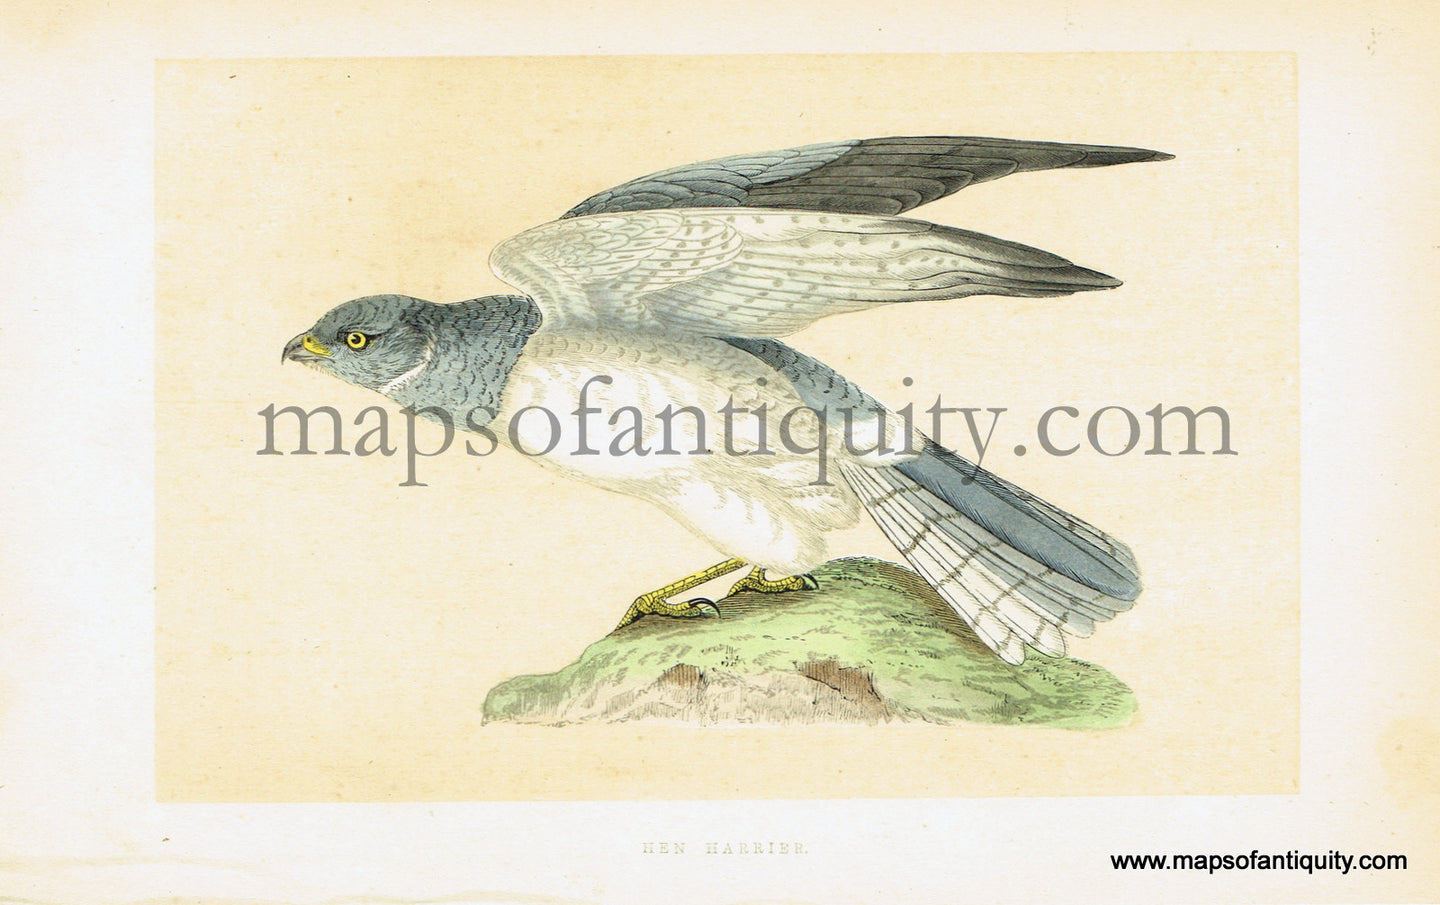 Antique-Hand-Colored-Engraved-Illustration-Hen-Harrier-Antique-Prints-Natural-History-Birds-1851-Morris-Maps-Of-Antiquity